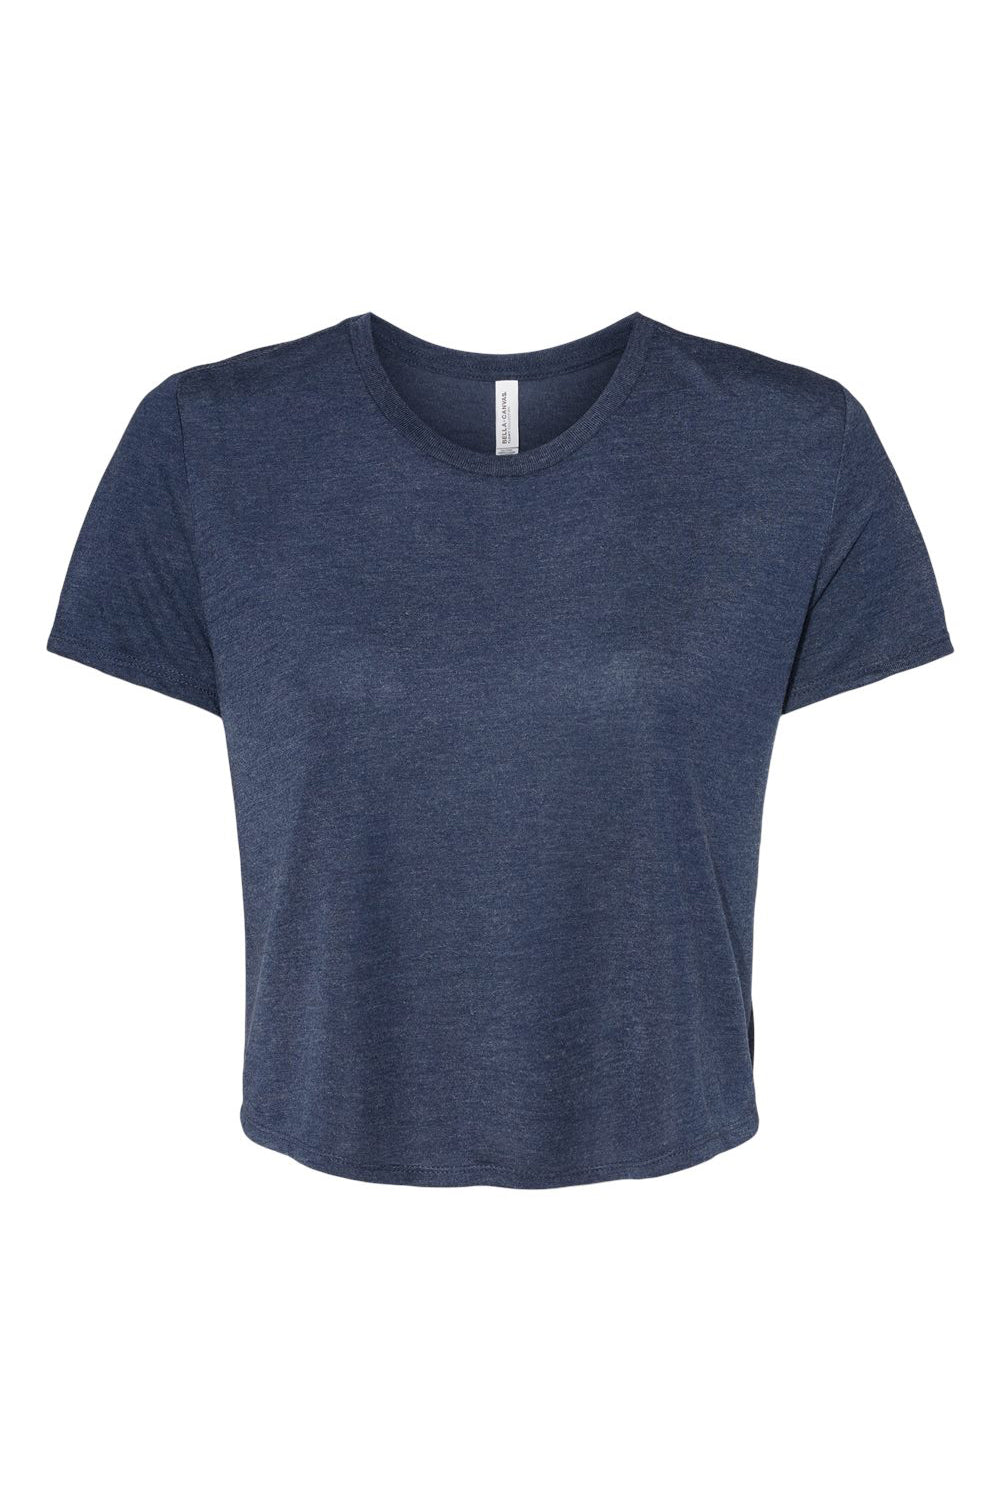 Bella + Canvas B8882/8882 Womens Flowy Cropped Short Sleeve Crewneck T-Shirt Heather Navy Blue Flat Front